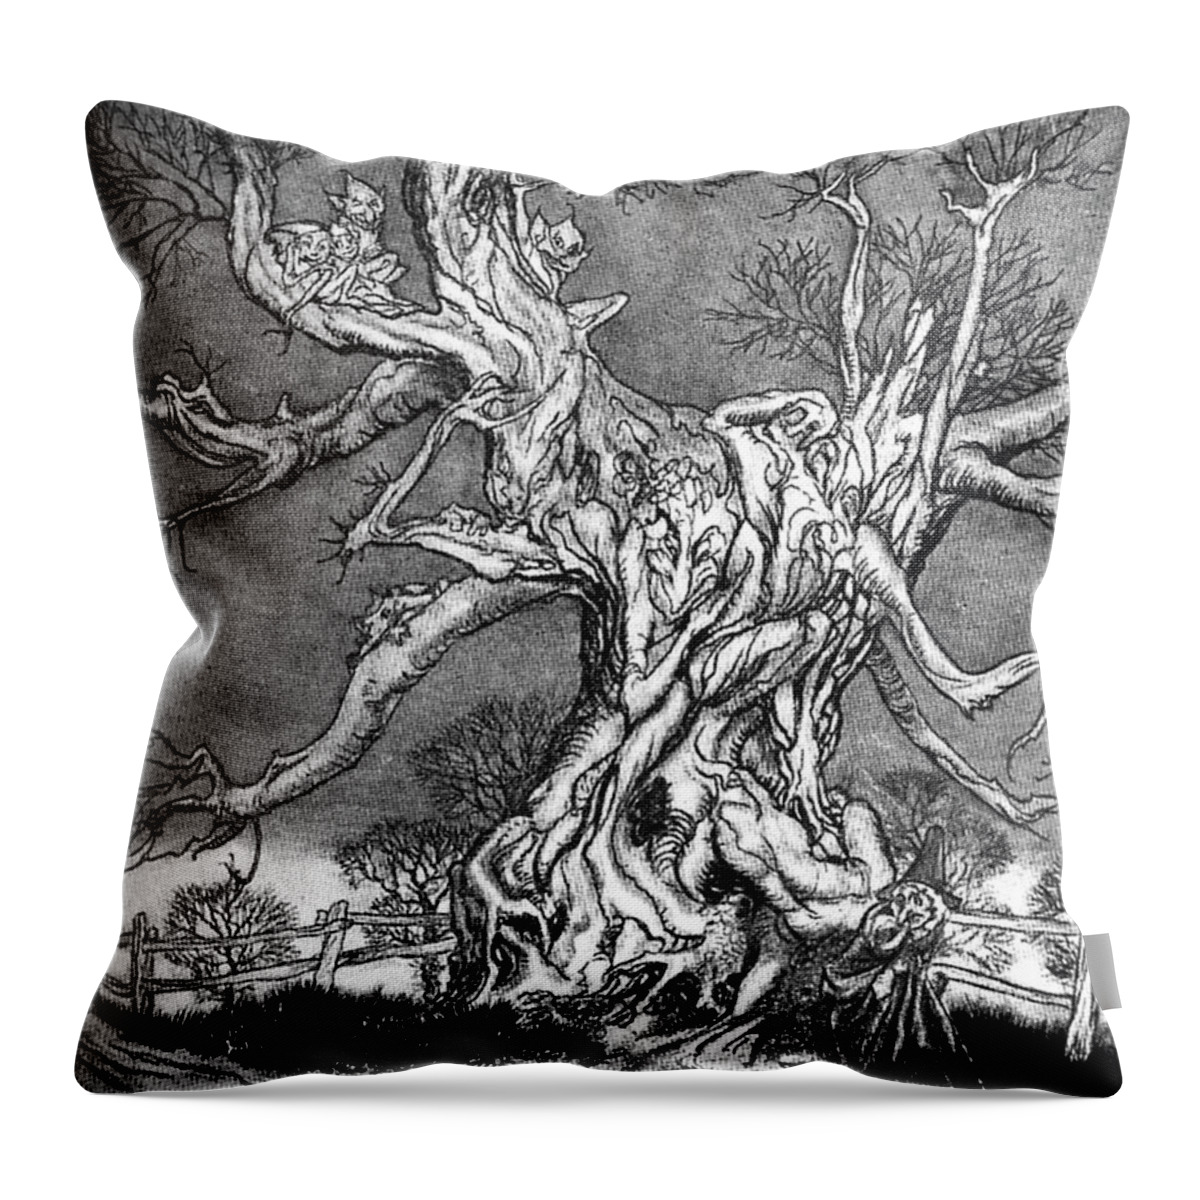 Sleepy Hollow Throw Pillow featuring the drawing The Legend Of Sleepy Hollow by Arthur Rackham